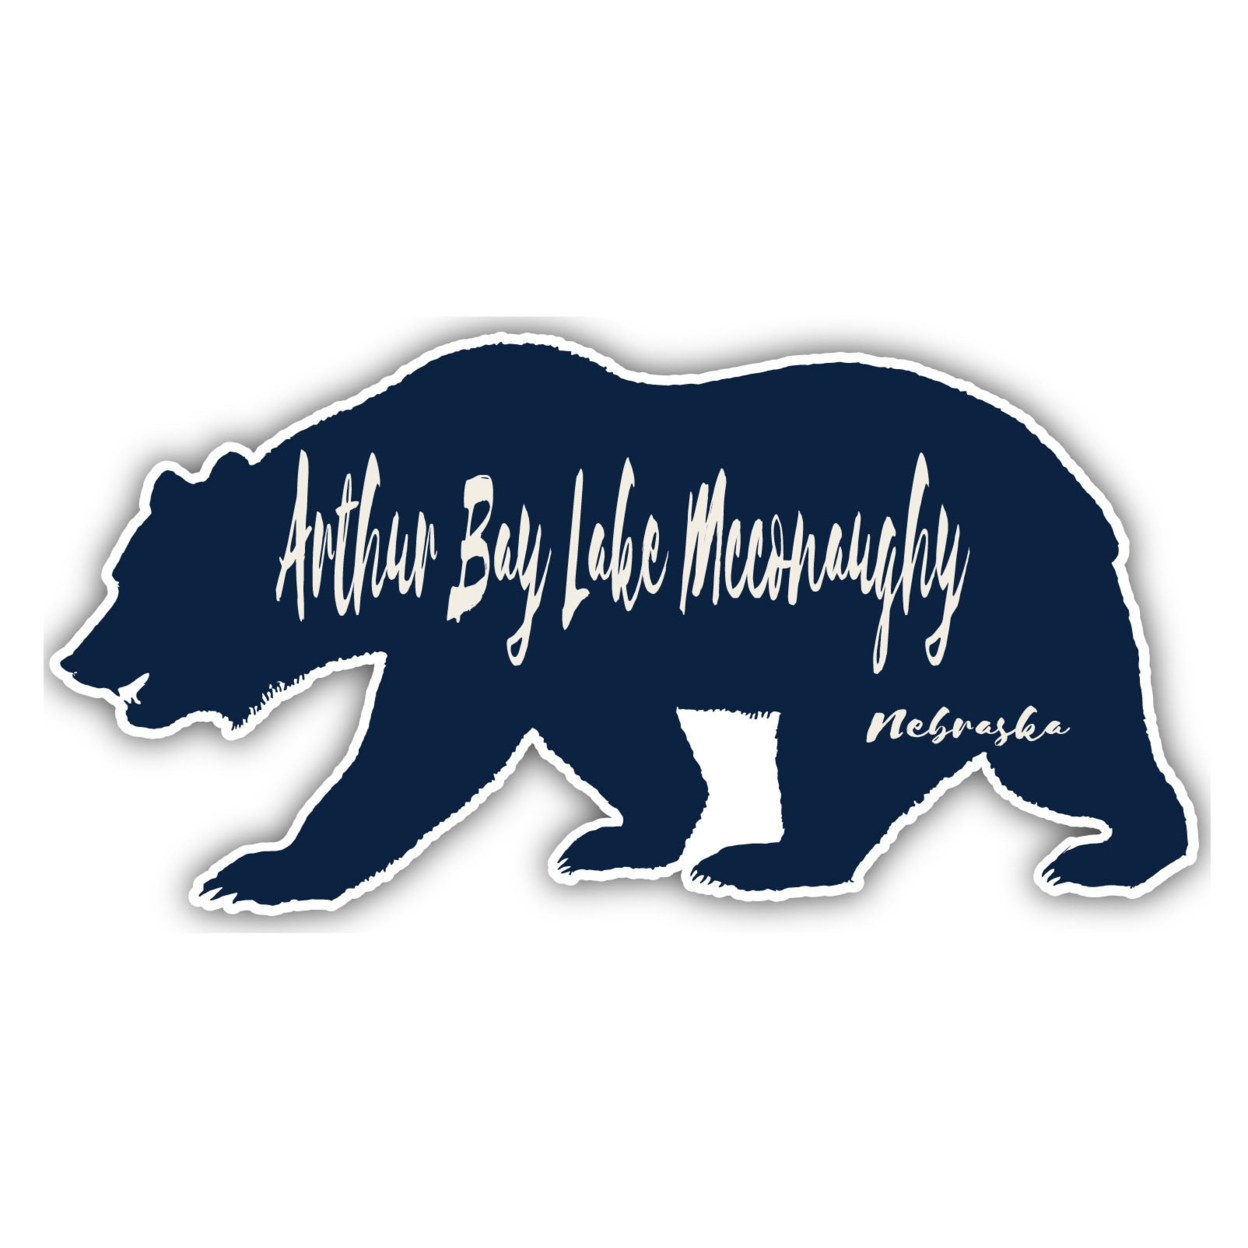 Arthur Bay Lake Mcconaughy Nebraska Souvenir Decorative Stickers (Choose Theme And Size) - 4-Pack, 10-Inch, Bear